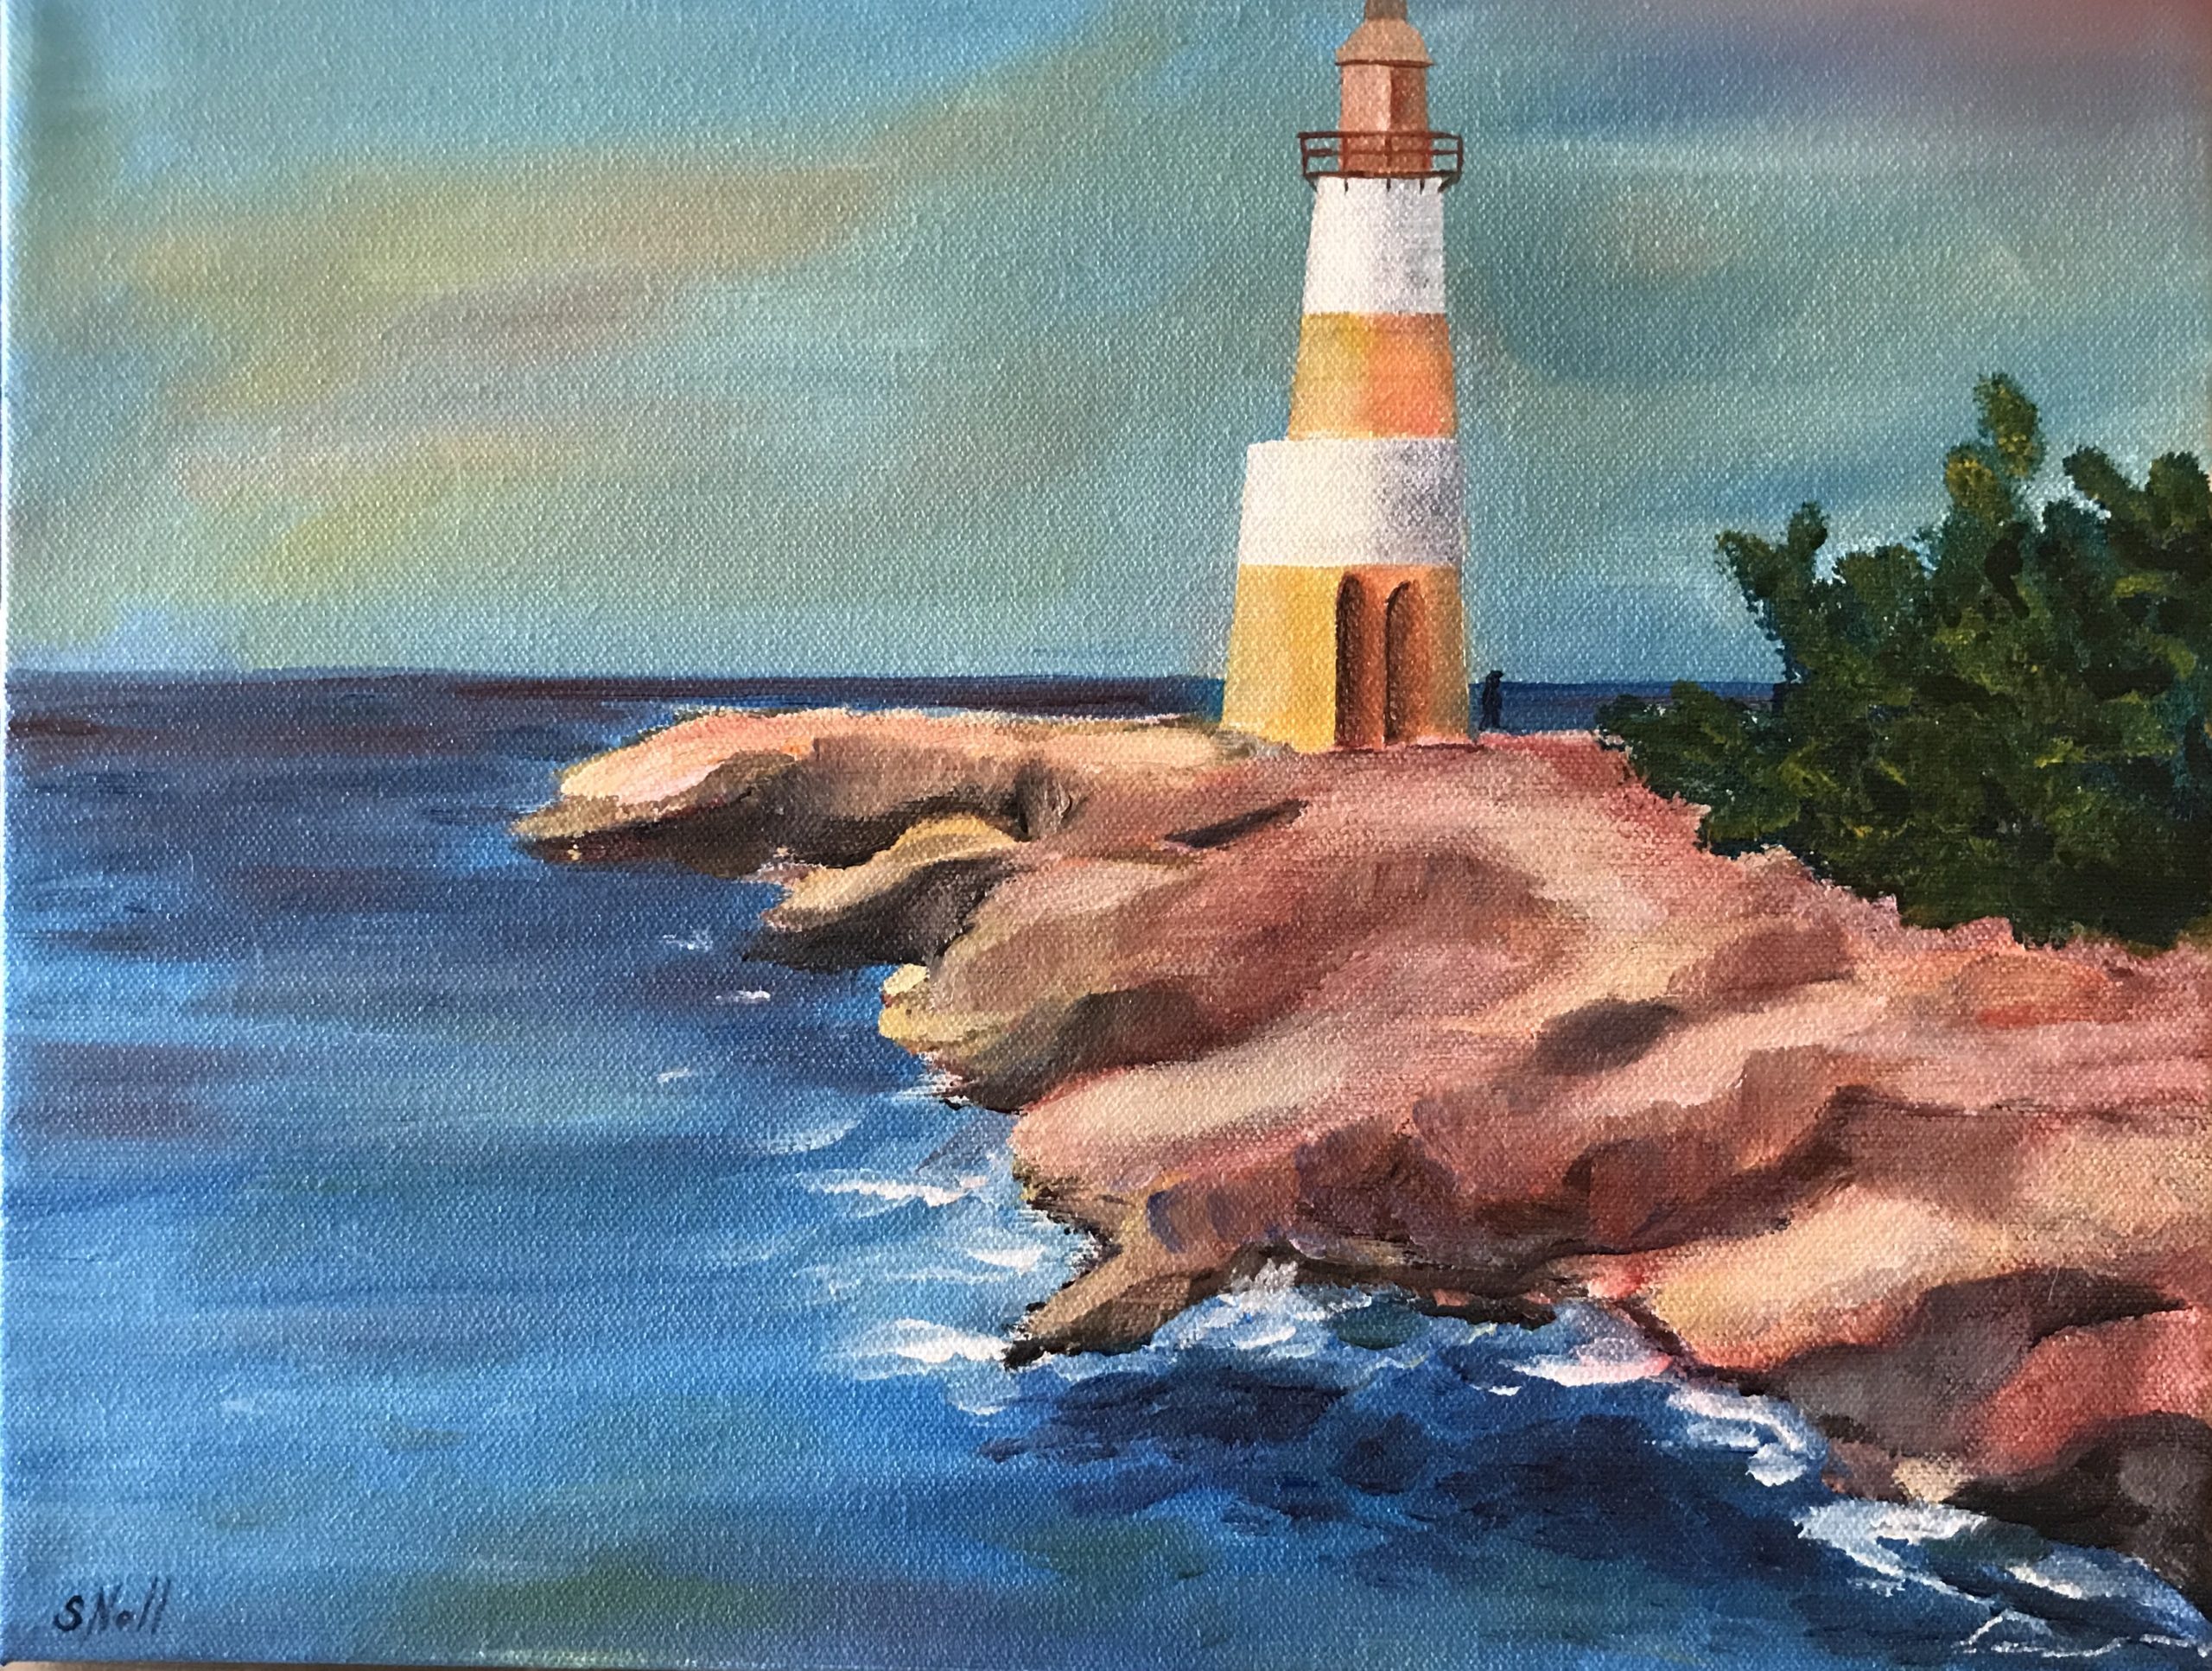 Folly Point Lighthouse in Port Antonio Jamaica